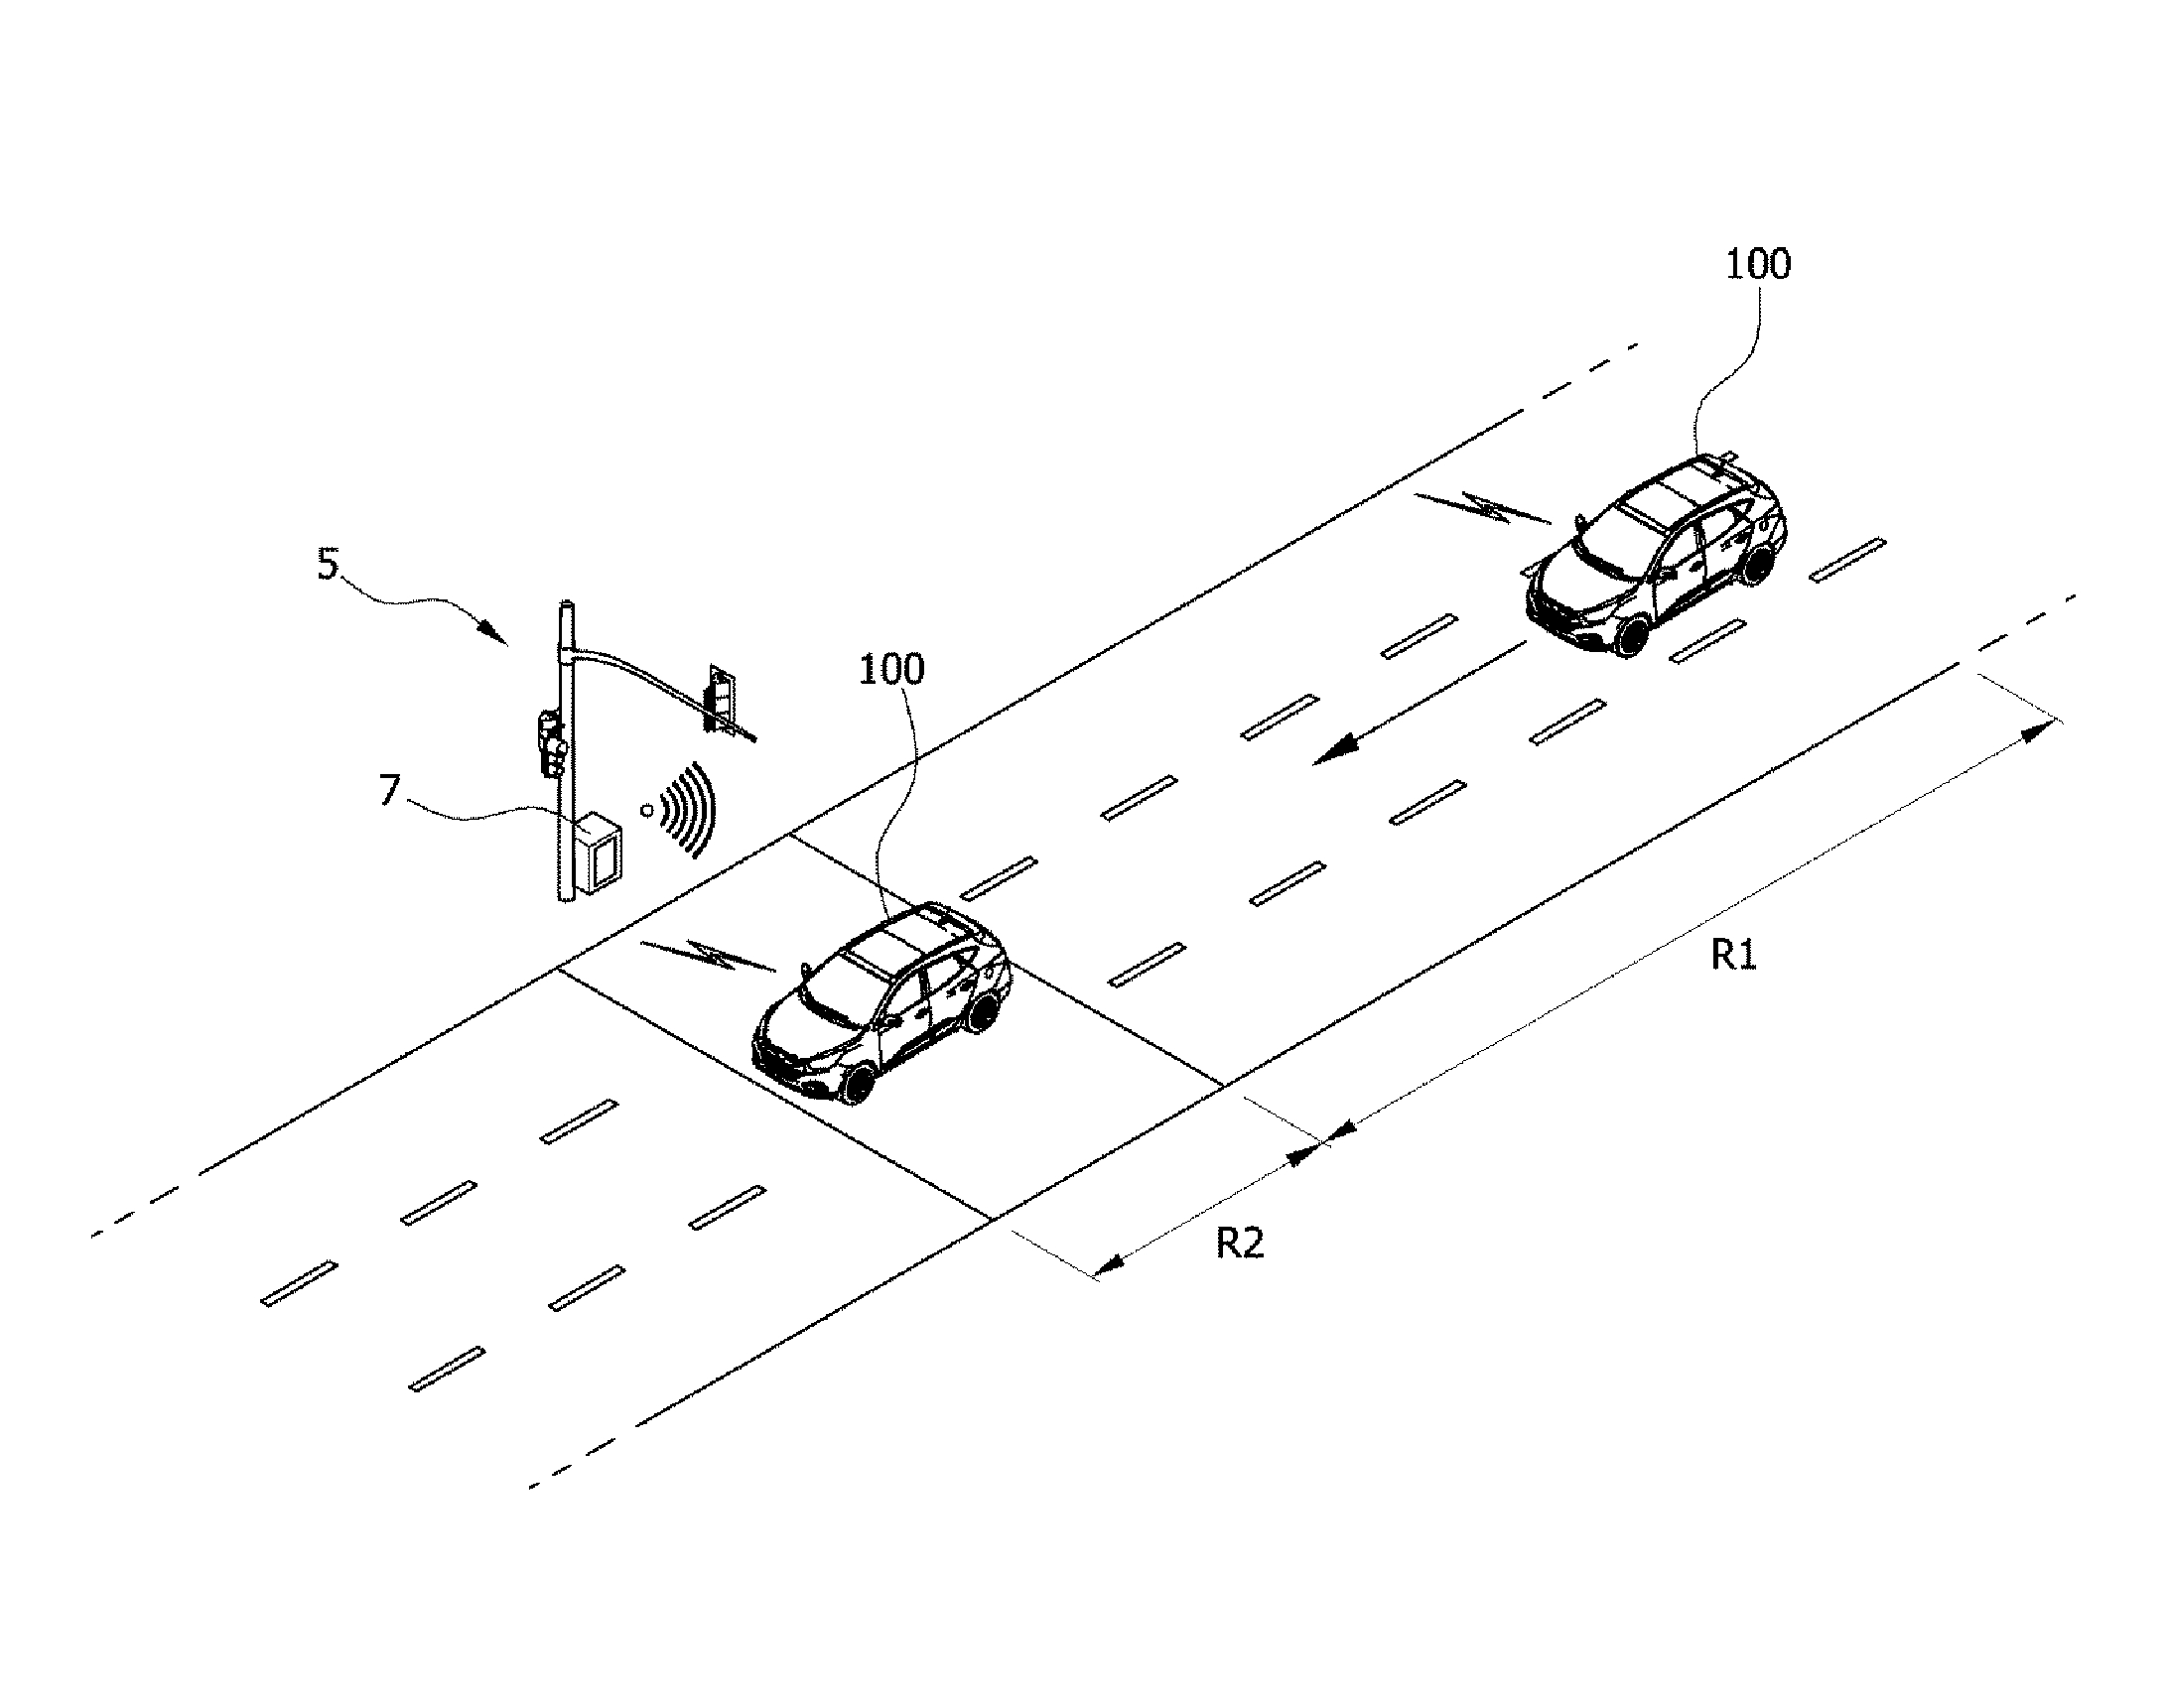 Speeding enforcement method of vehicle using wireless communications